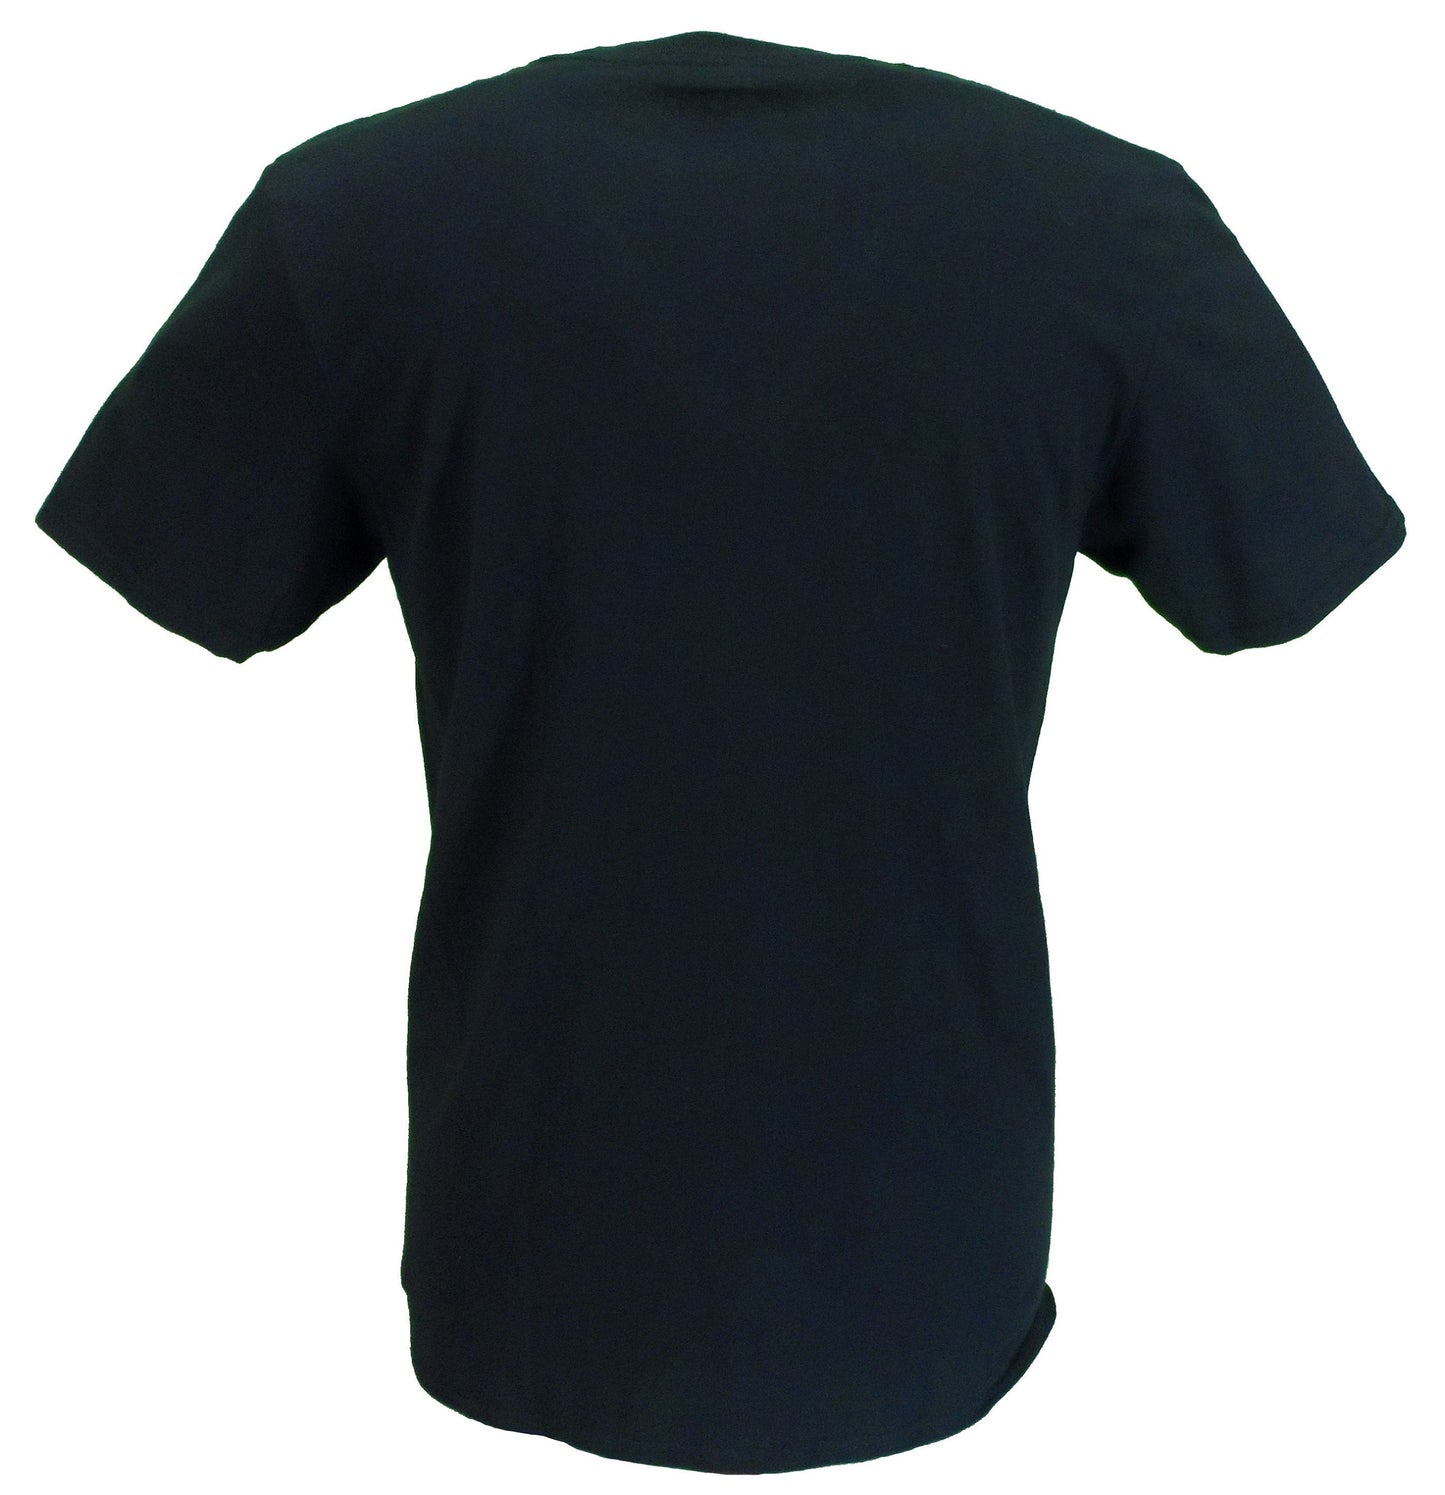 Schwarzes offizielles Herren-T-Shirt aus Zellstoff mit mehreren Logos